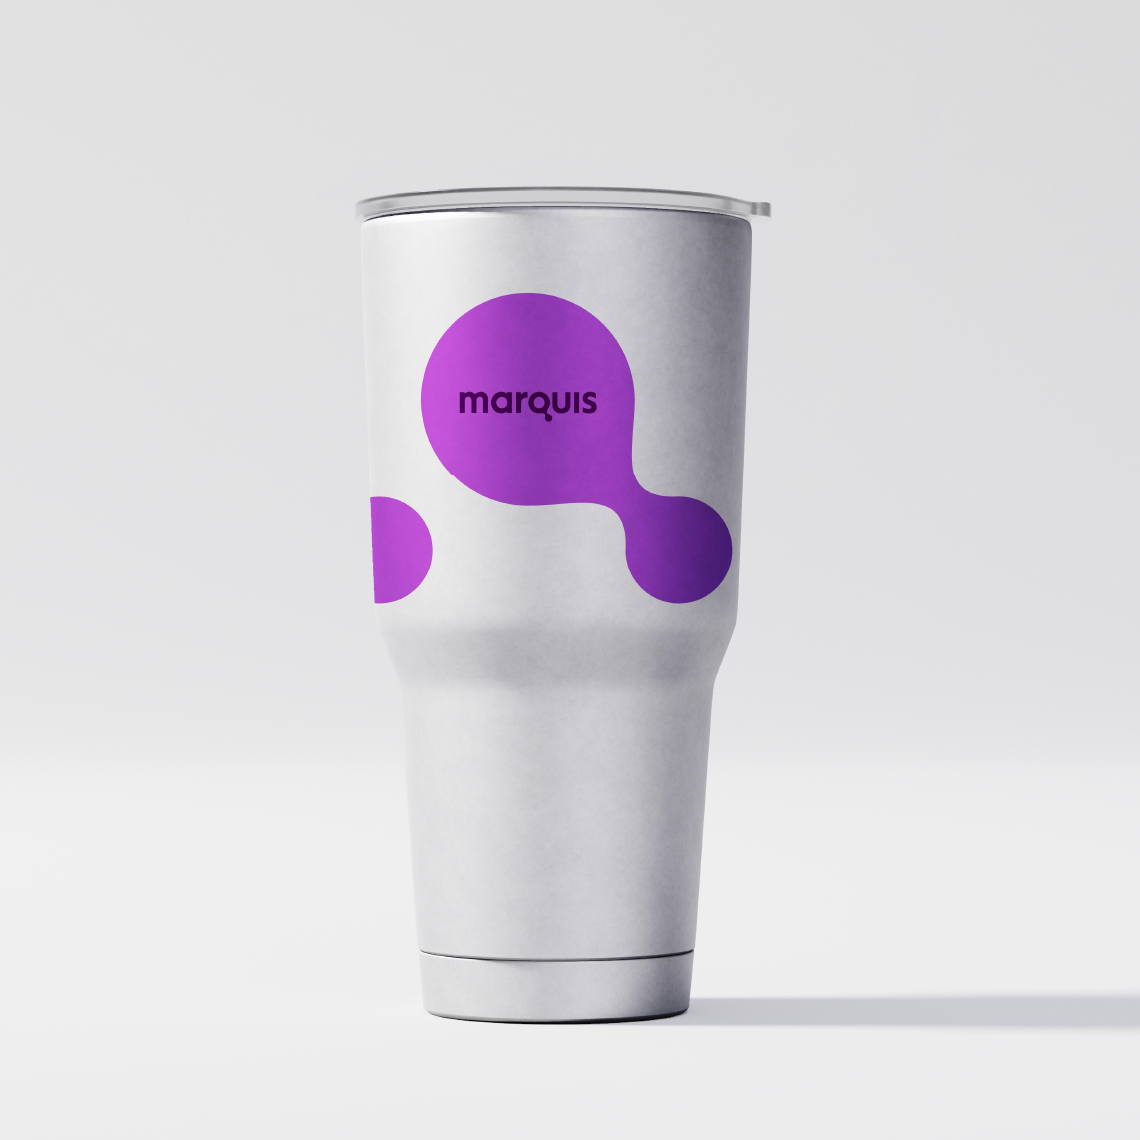 example of Marketing materials: Thermal Mugs